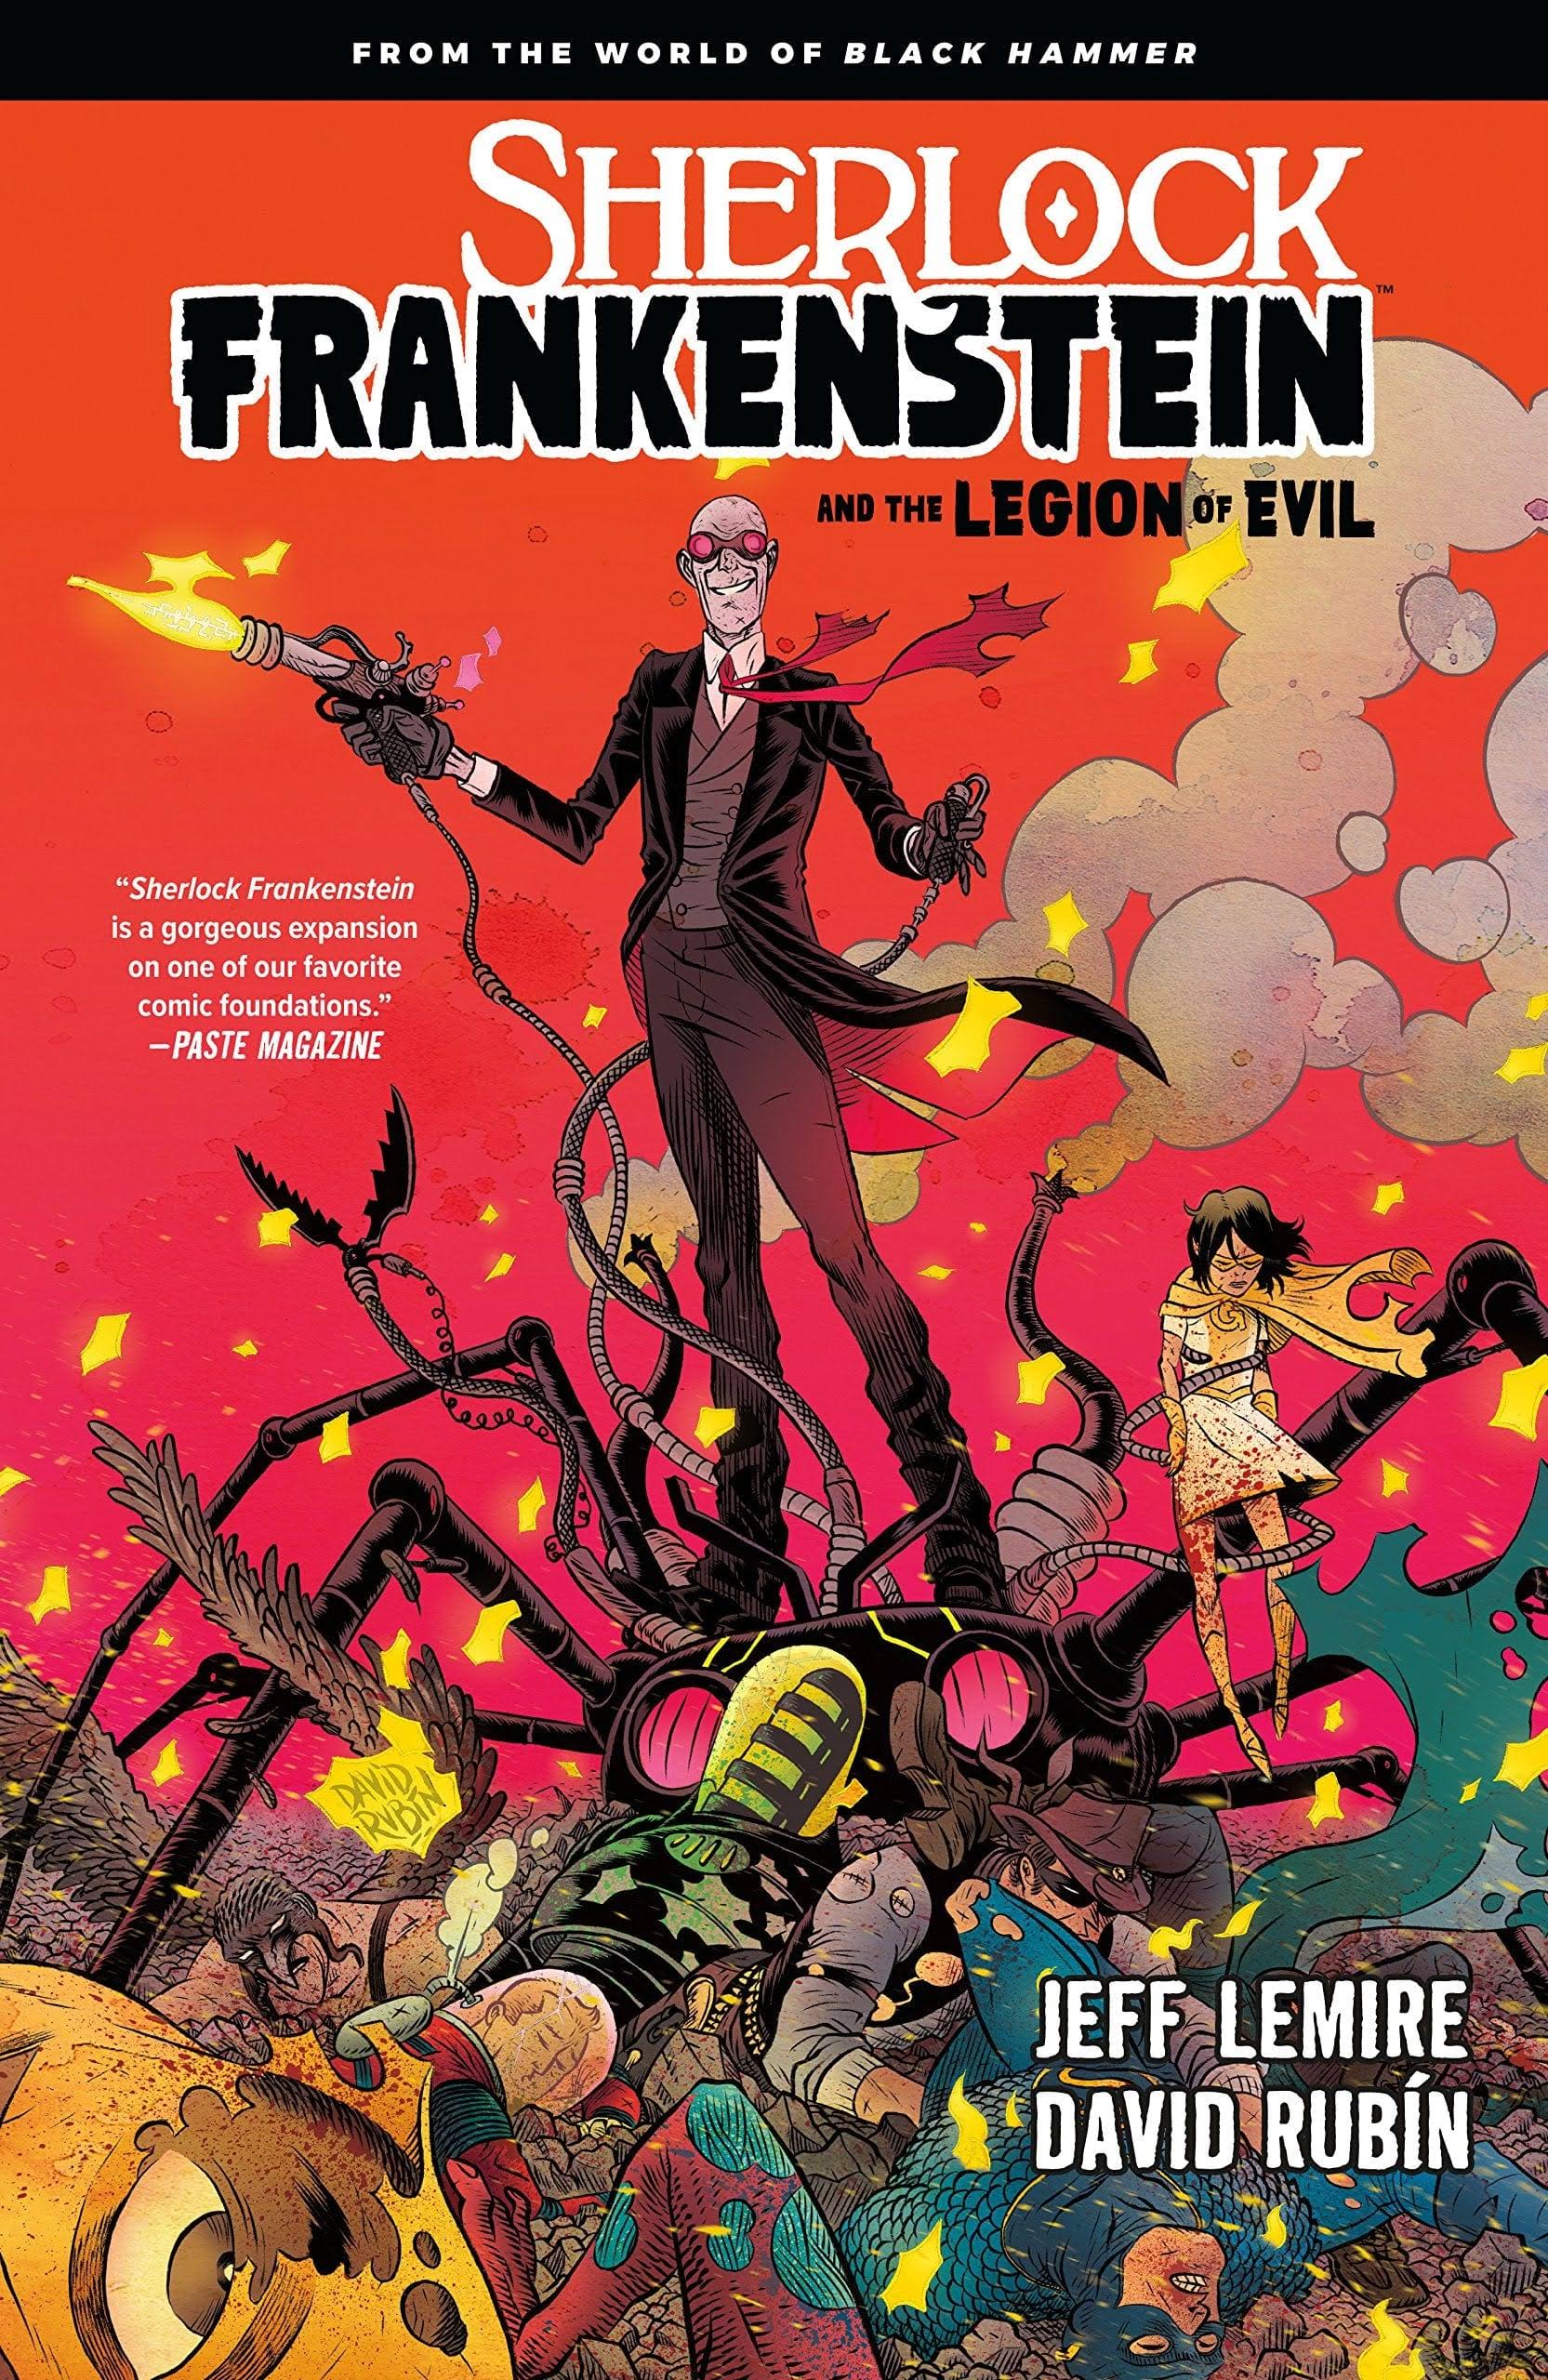 Sherlock Frankenstein and the Legion of Evil [Book]